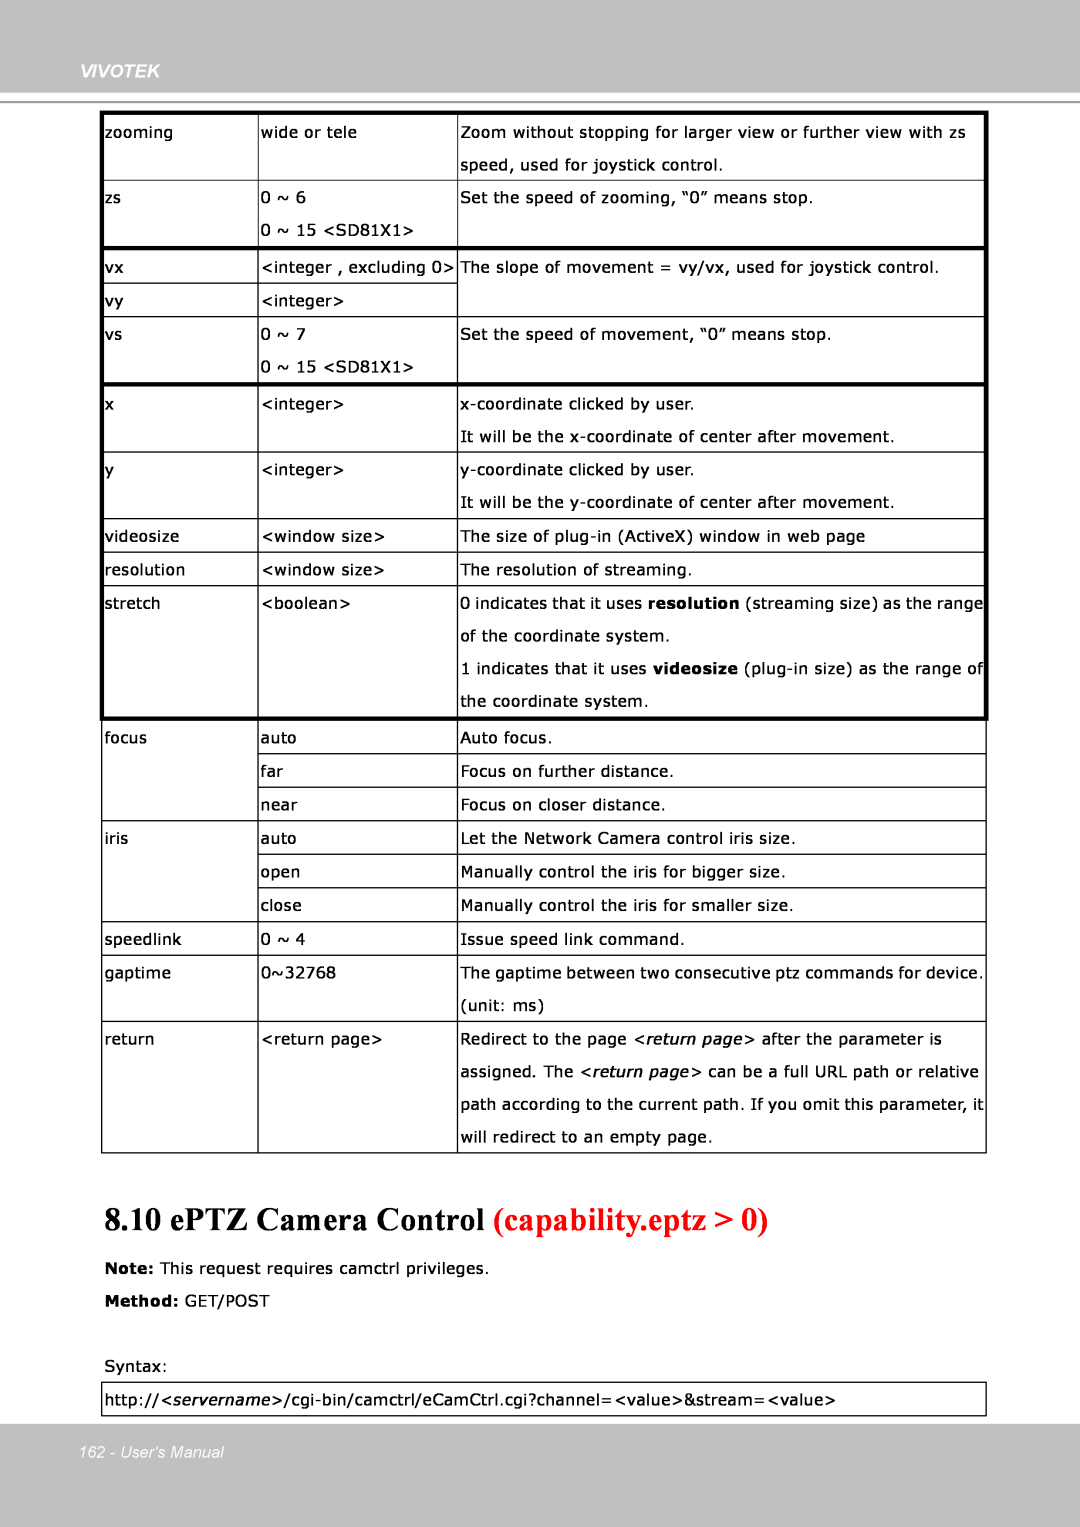 Vivotek IP8151 manual ePTZ Camera Control capability.eptz >, Vivotek, Method: GET/POST, Users Manual 